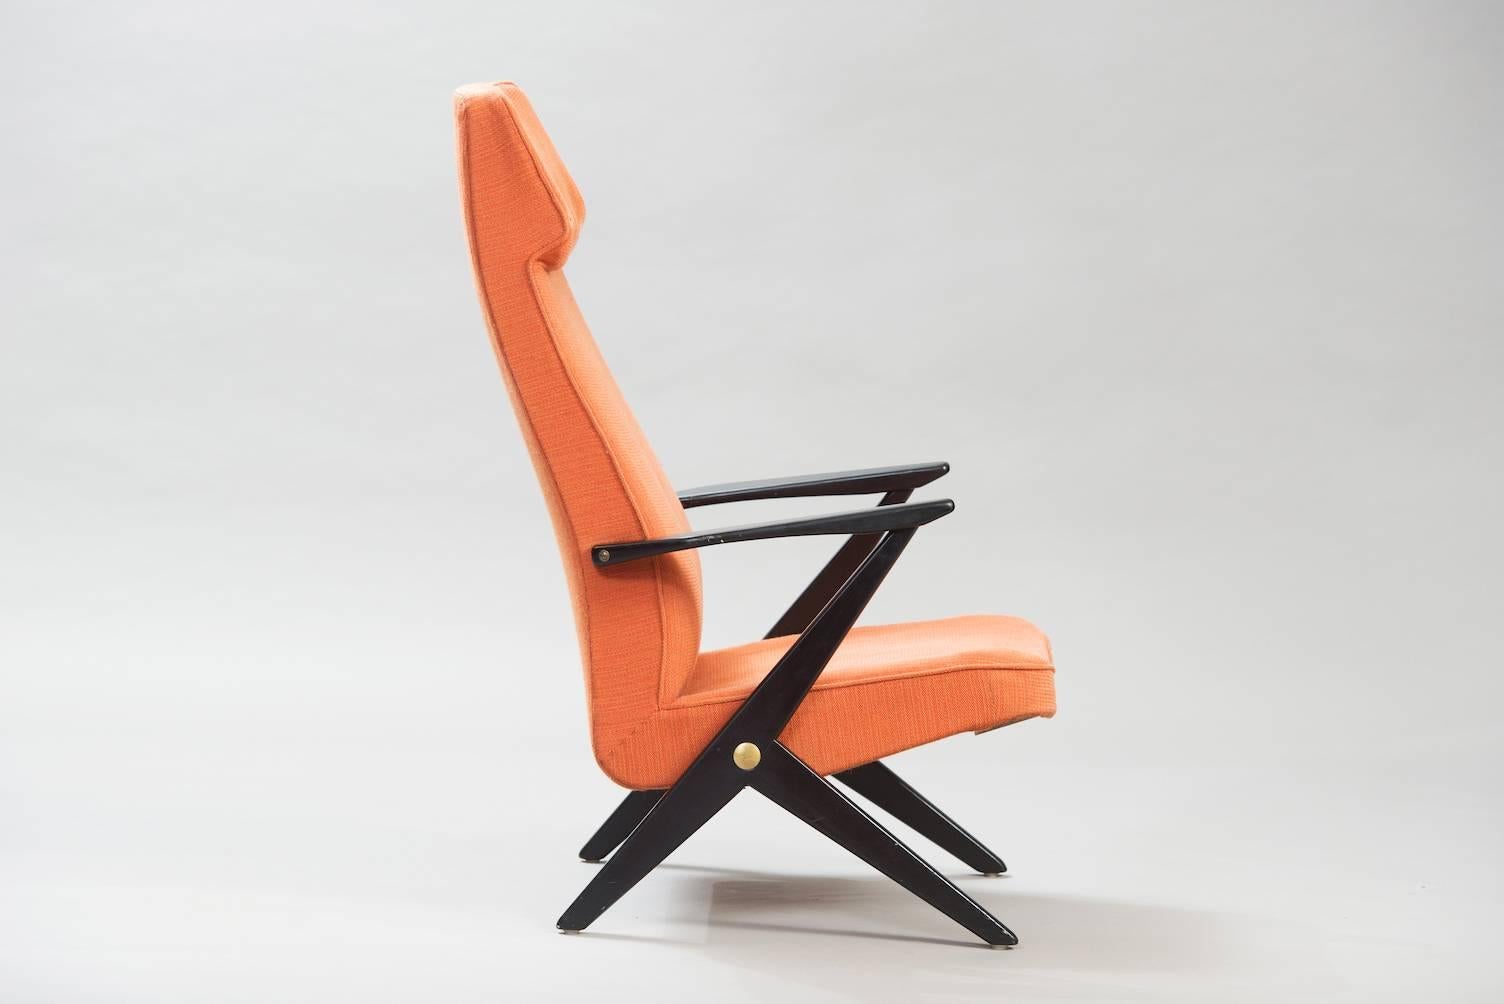 Black lacquered midcentury high back chair “Triva” for Nordiska Kompaniet.
Maker label underneath.